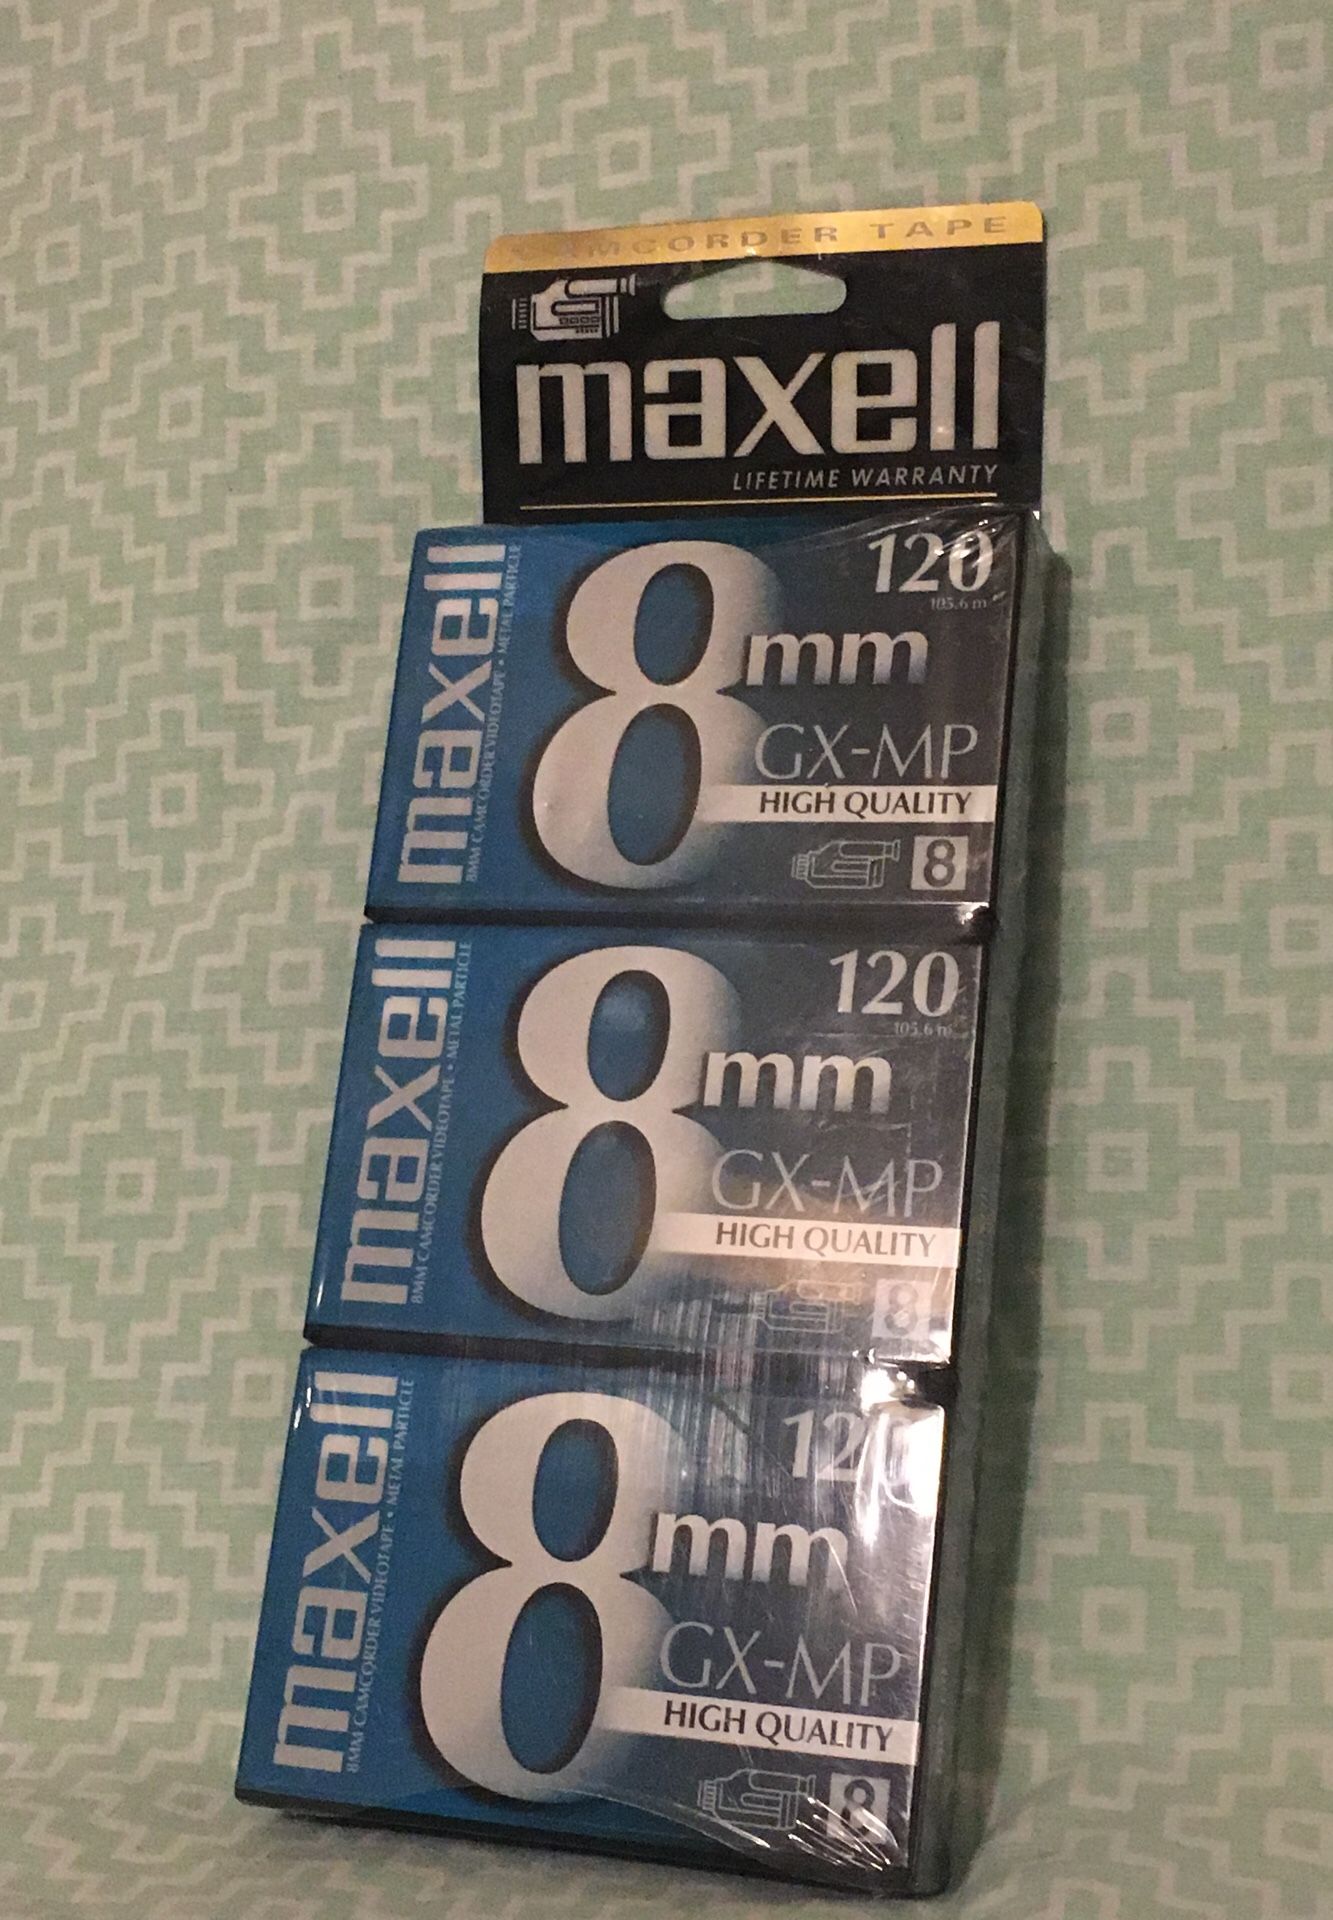 Maxell GX-MP 120 minuets High Quality 8mm videotape